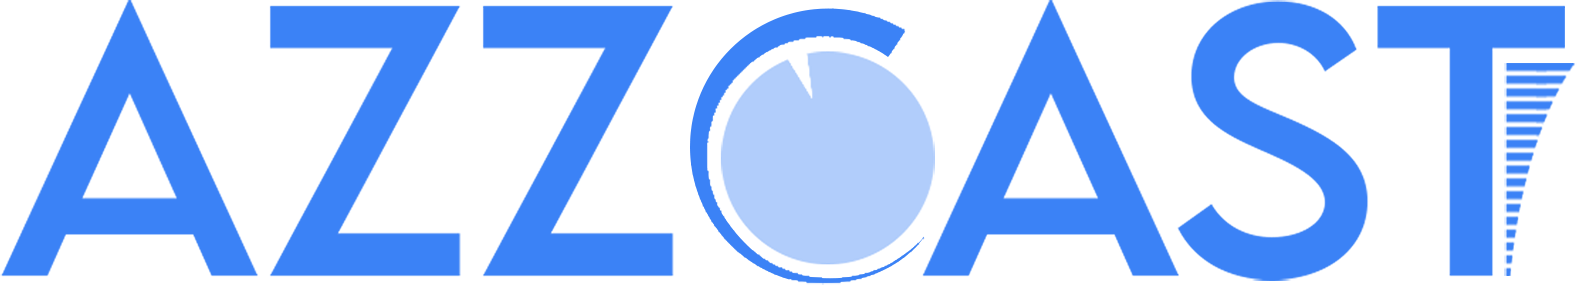 Azzcast Logo